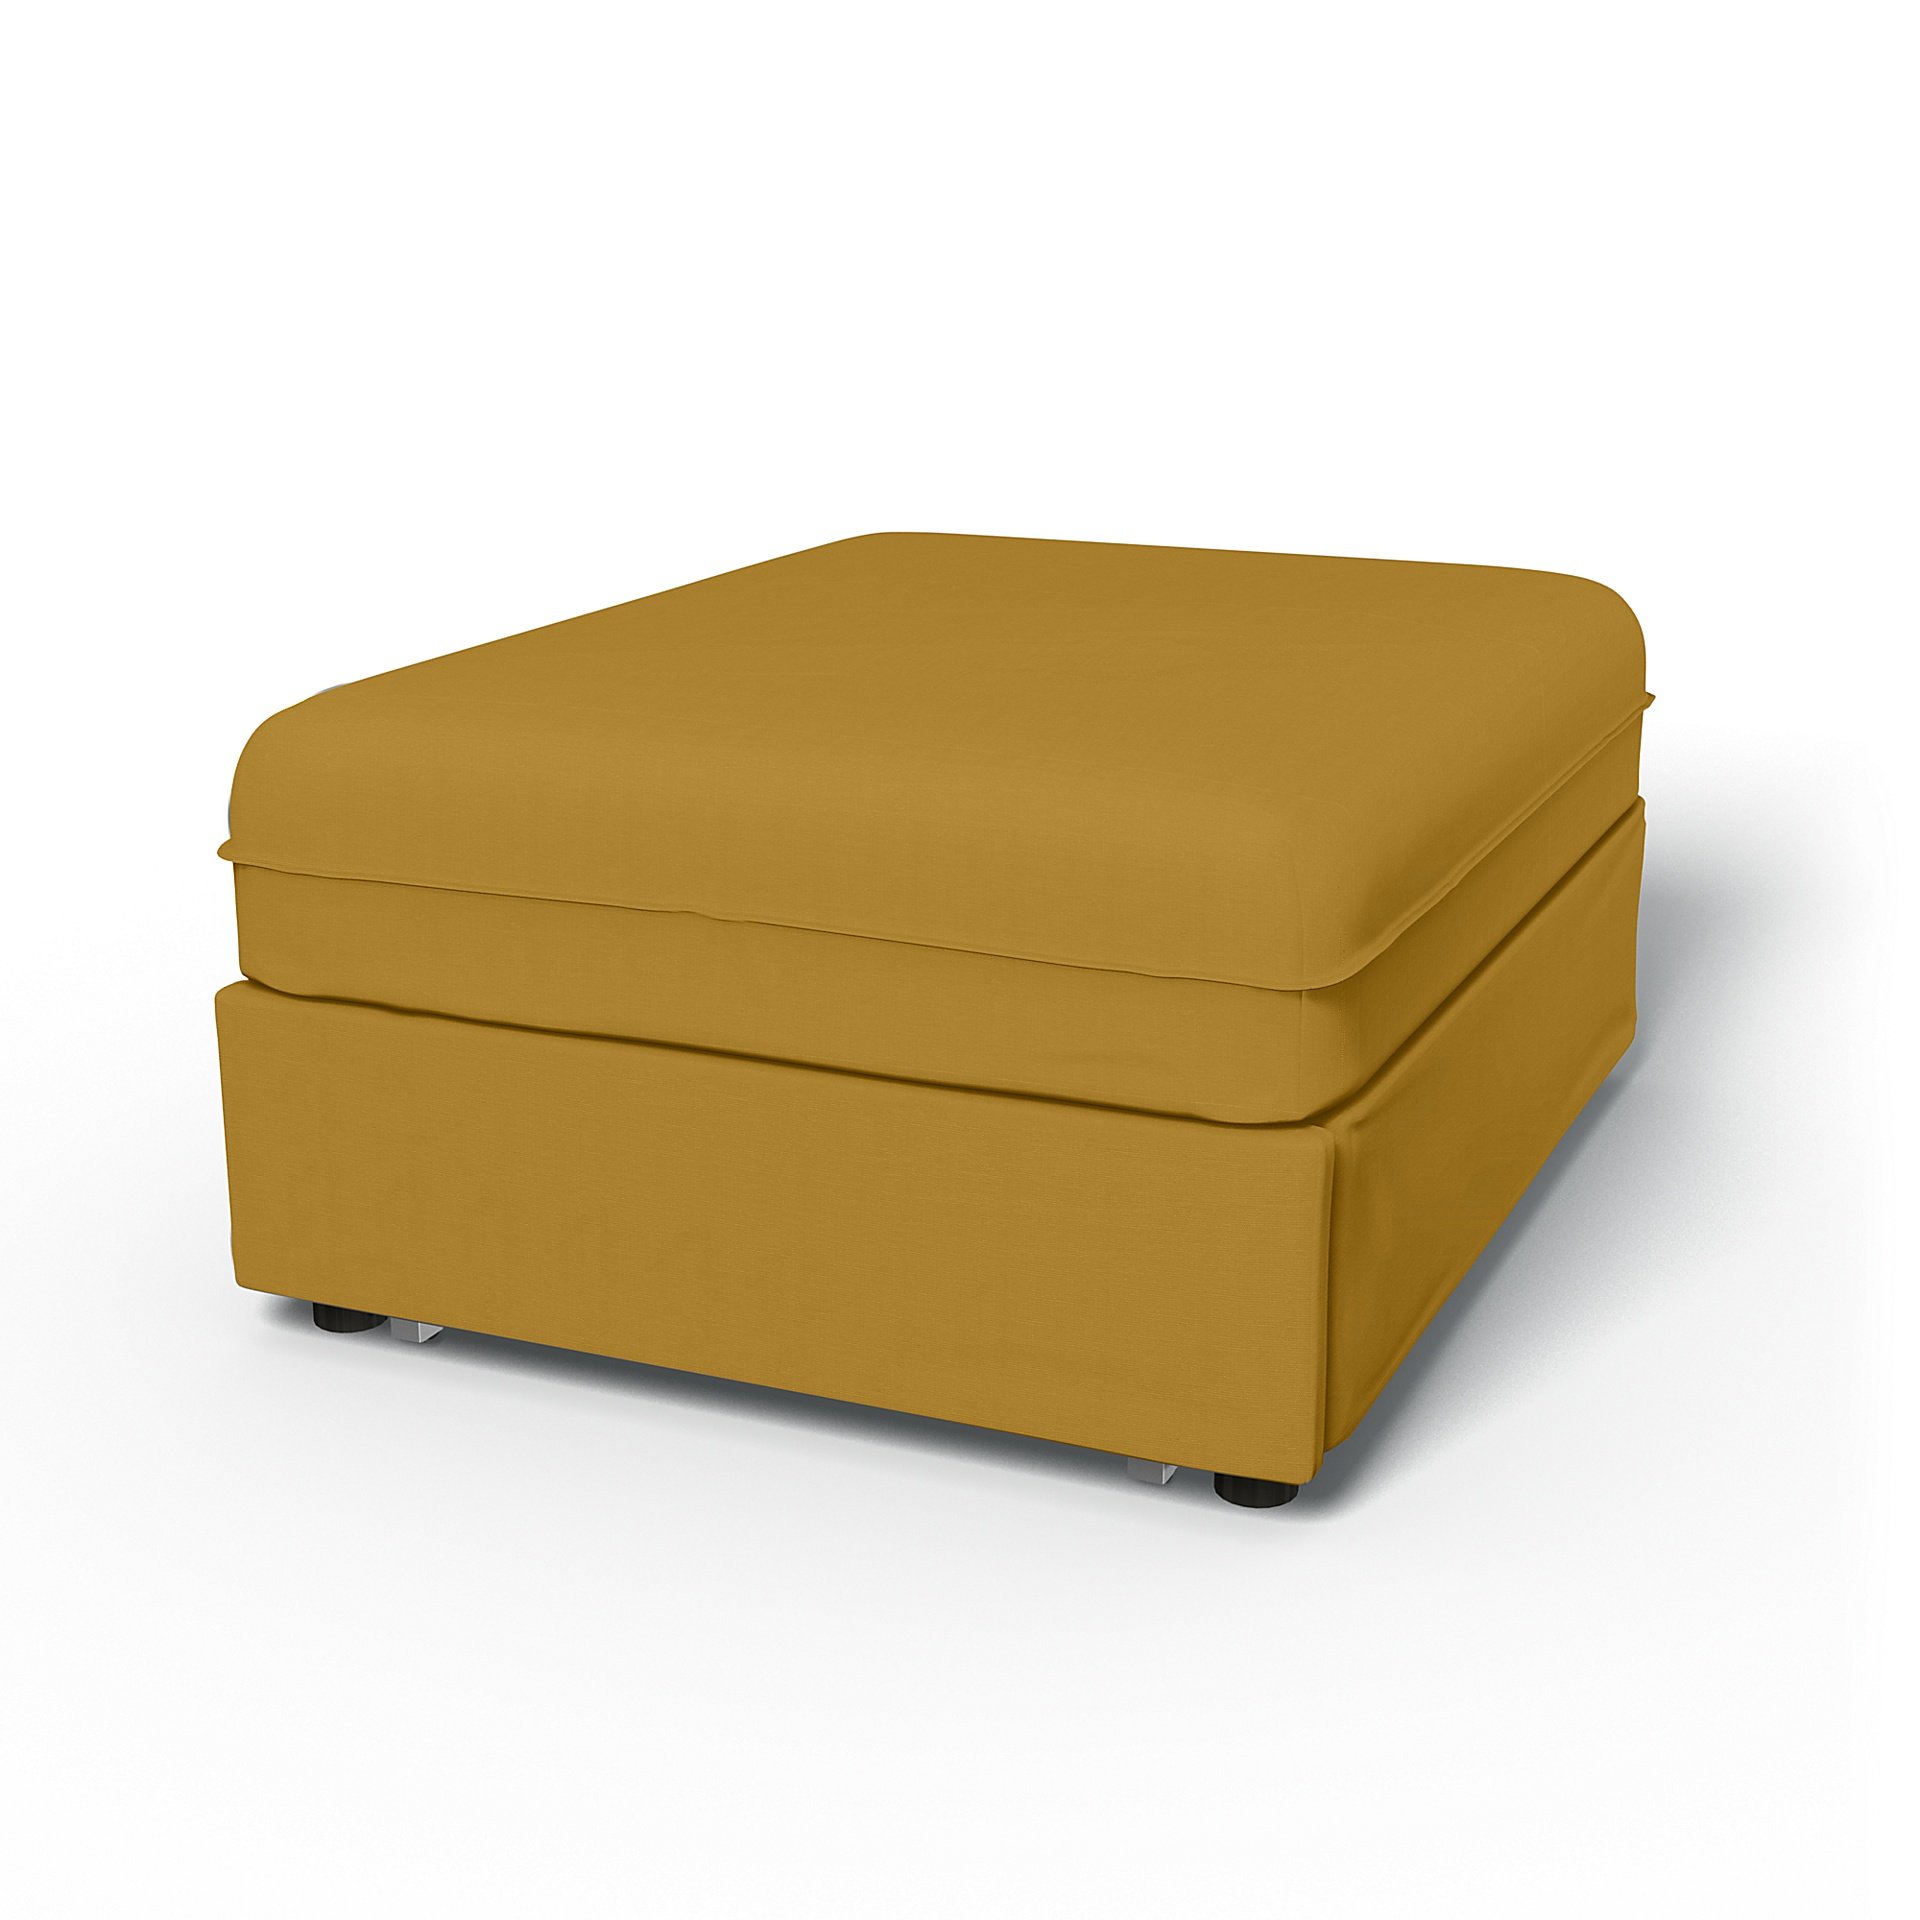 IKEA - Vallentuna Seat Module with Sofa Bed Cover 80x100cm 32x39in, Honey Mustard, Cotton - Bemz